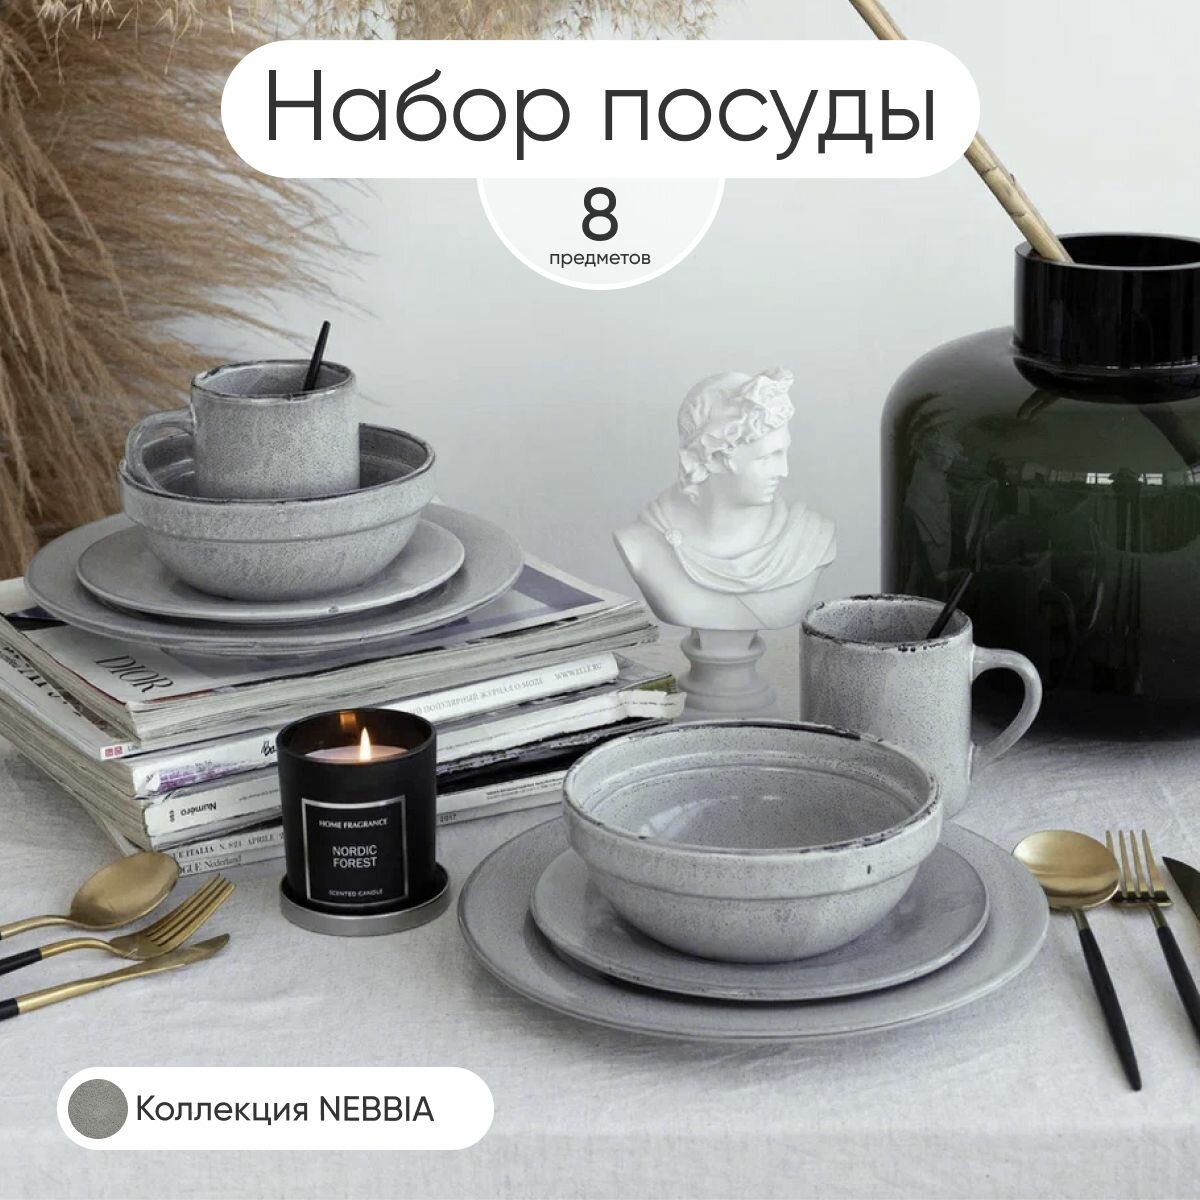 Столовая посуда набор Nebbia 8 предметов